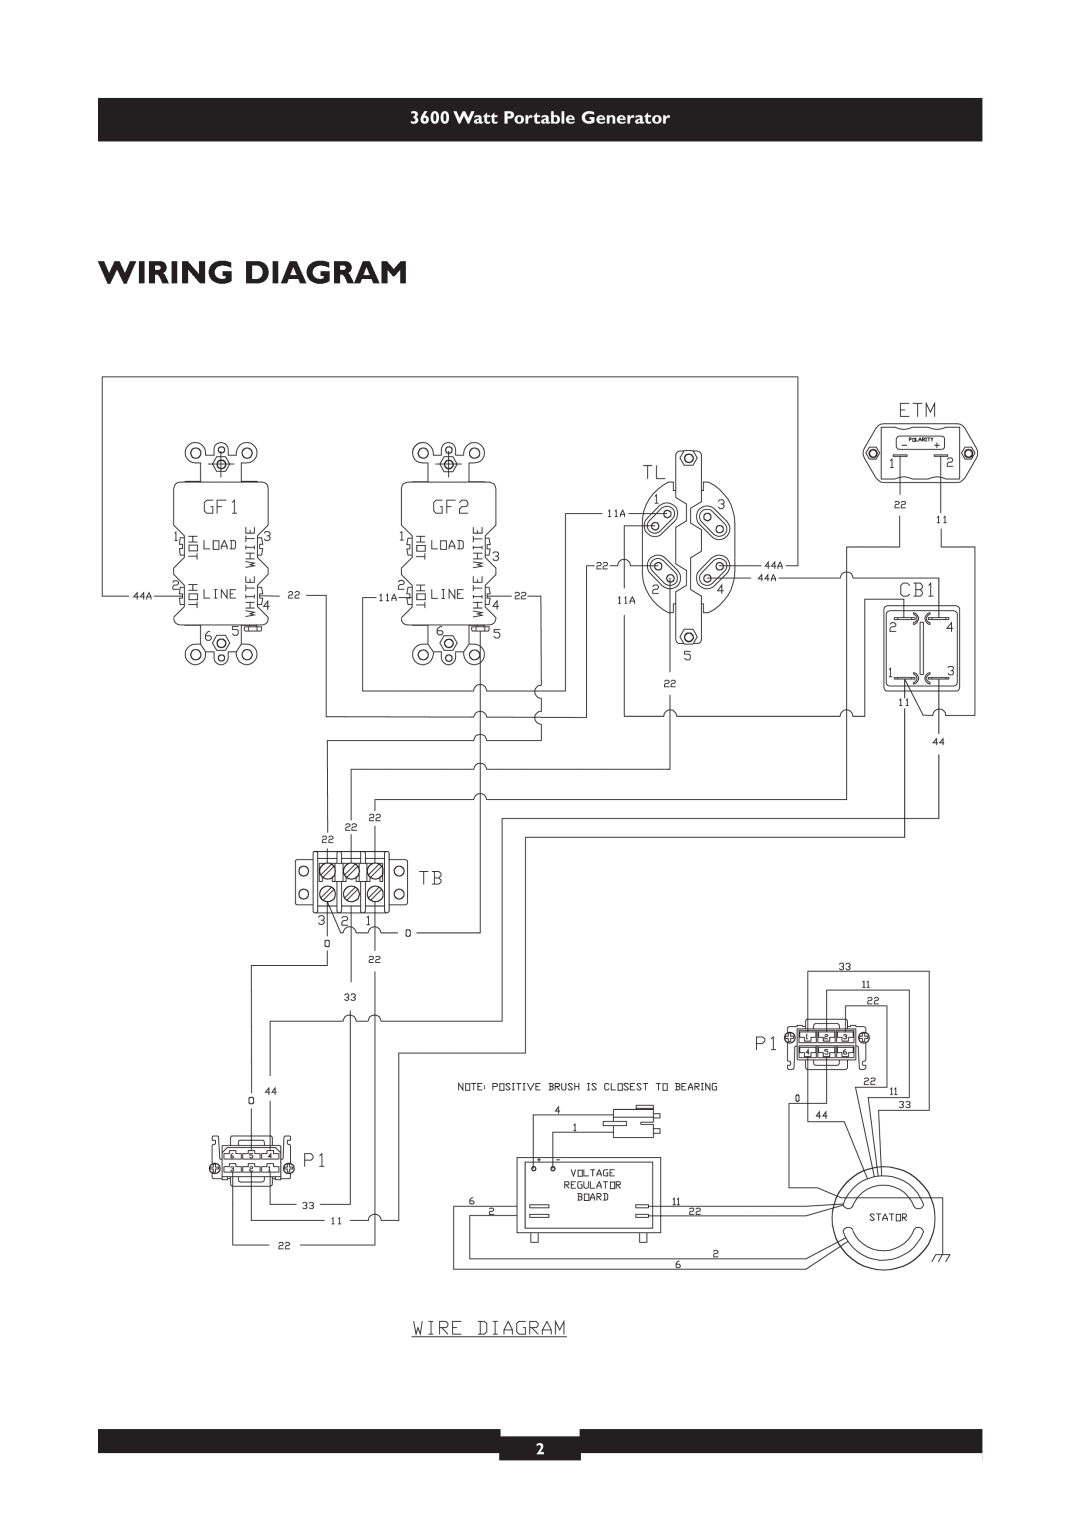 Briggs & Stratton 030231 manual Wiring Diagram, Watt Portable Generator 